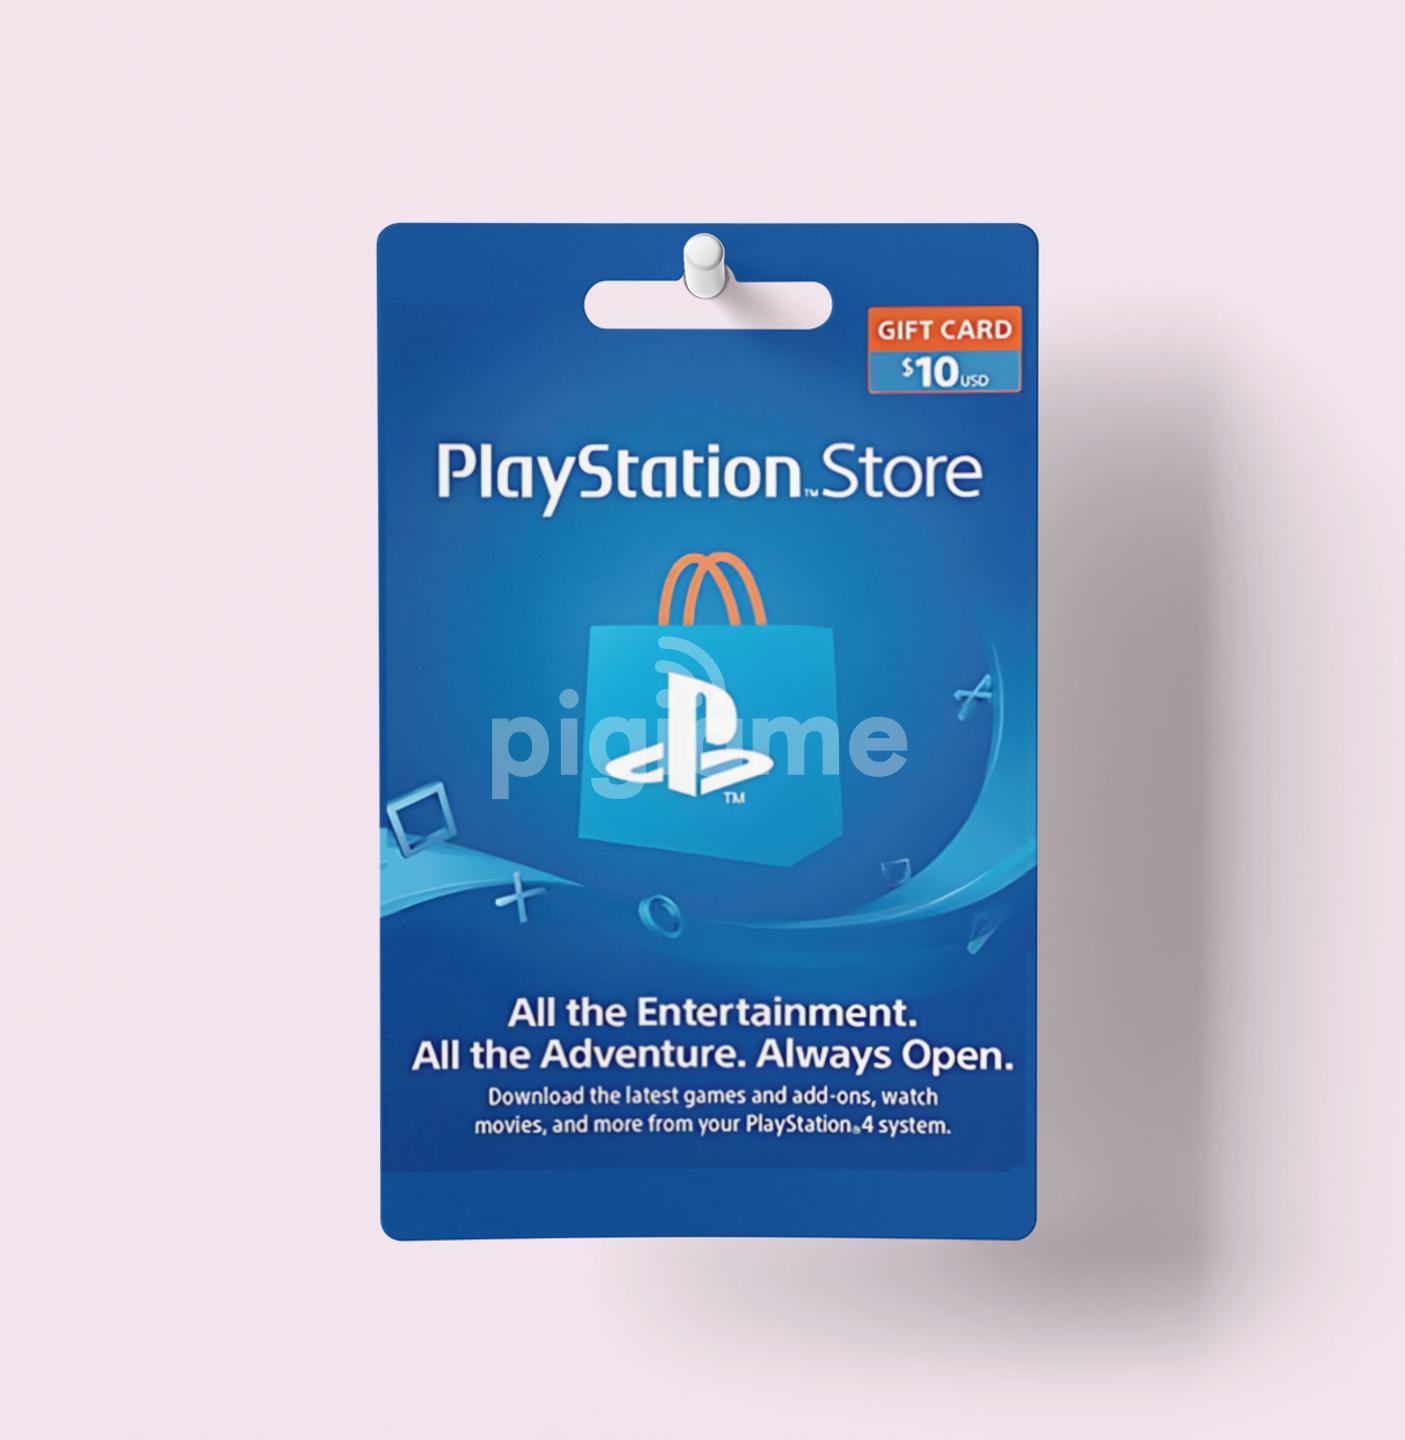 PlayStation Plus Premium 46 Days US PSN CD Key